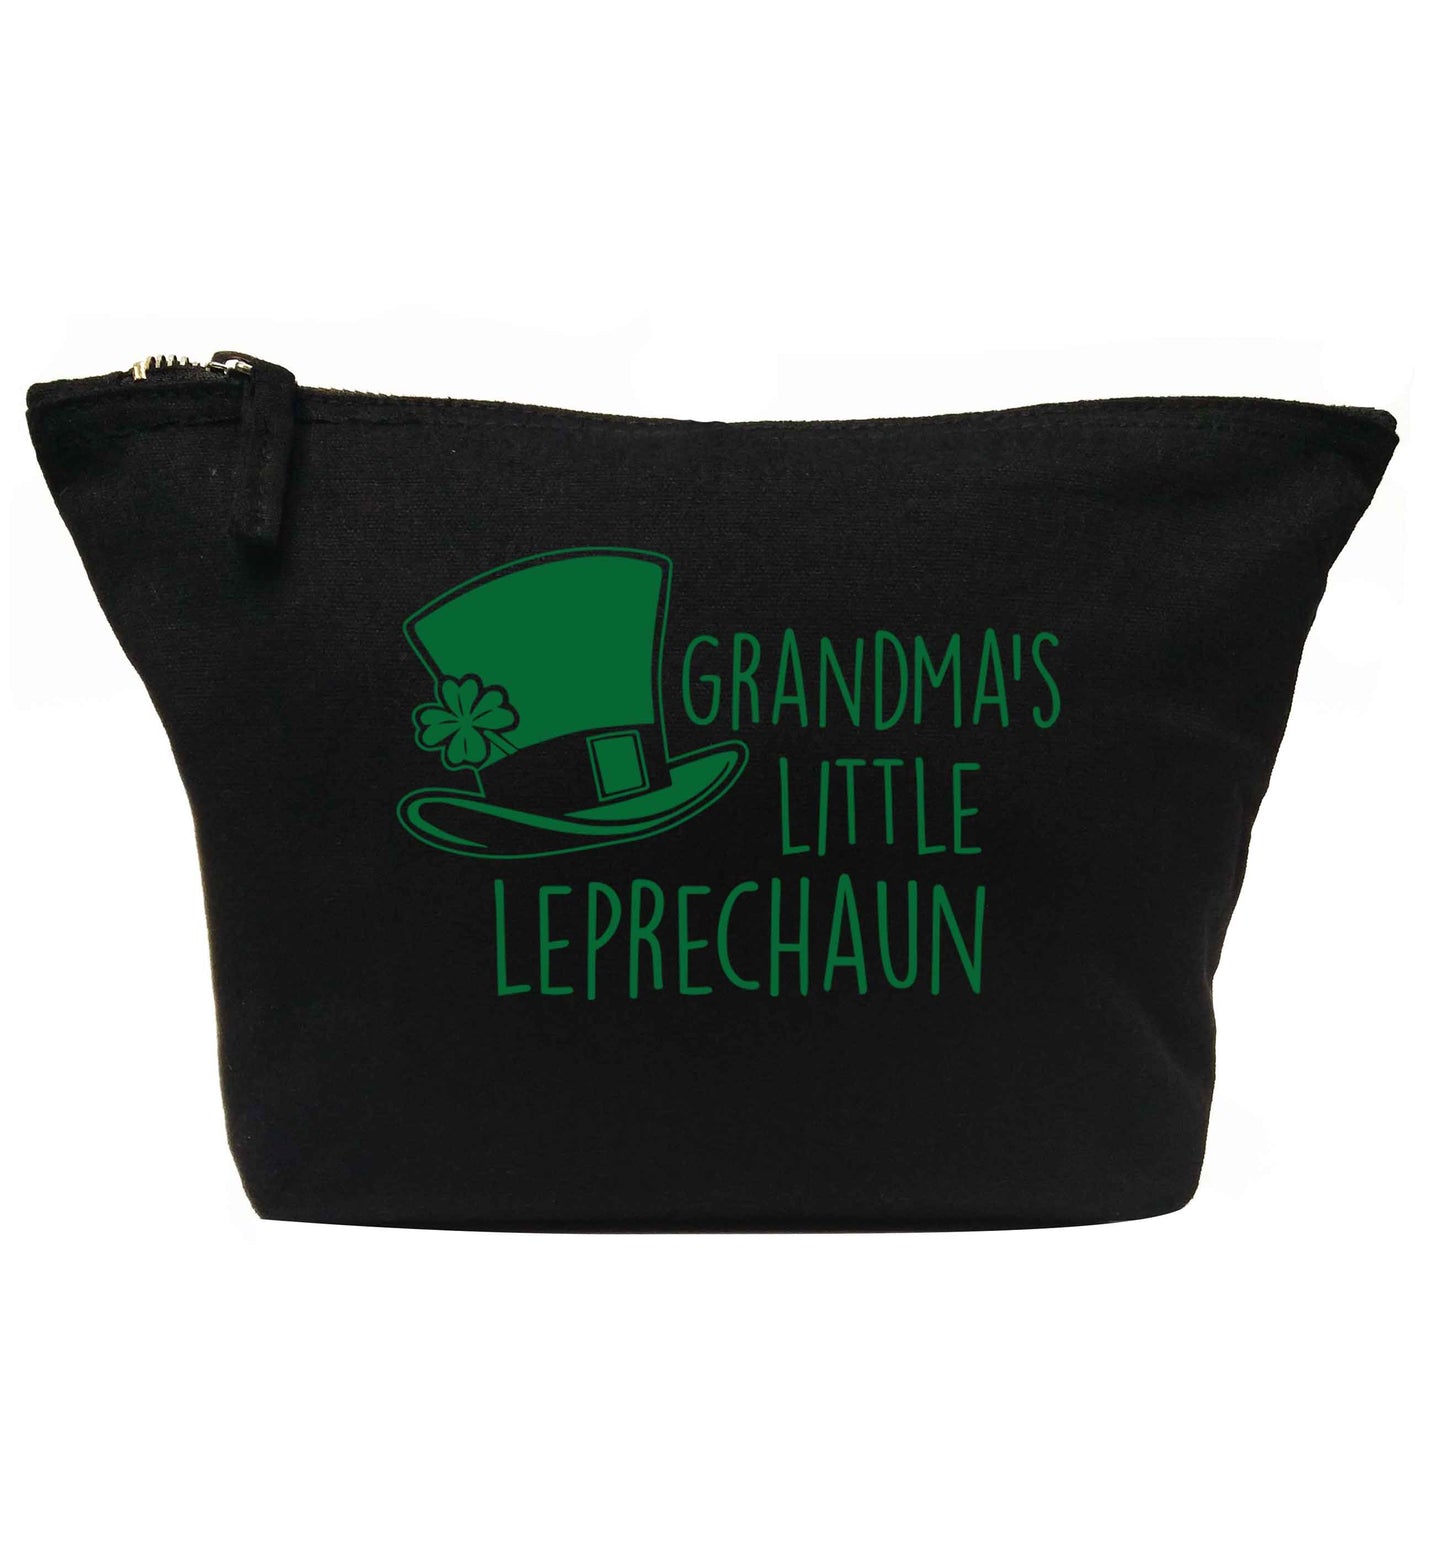 Grandma's little leprechaun | Makeup / wash bag